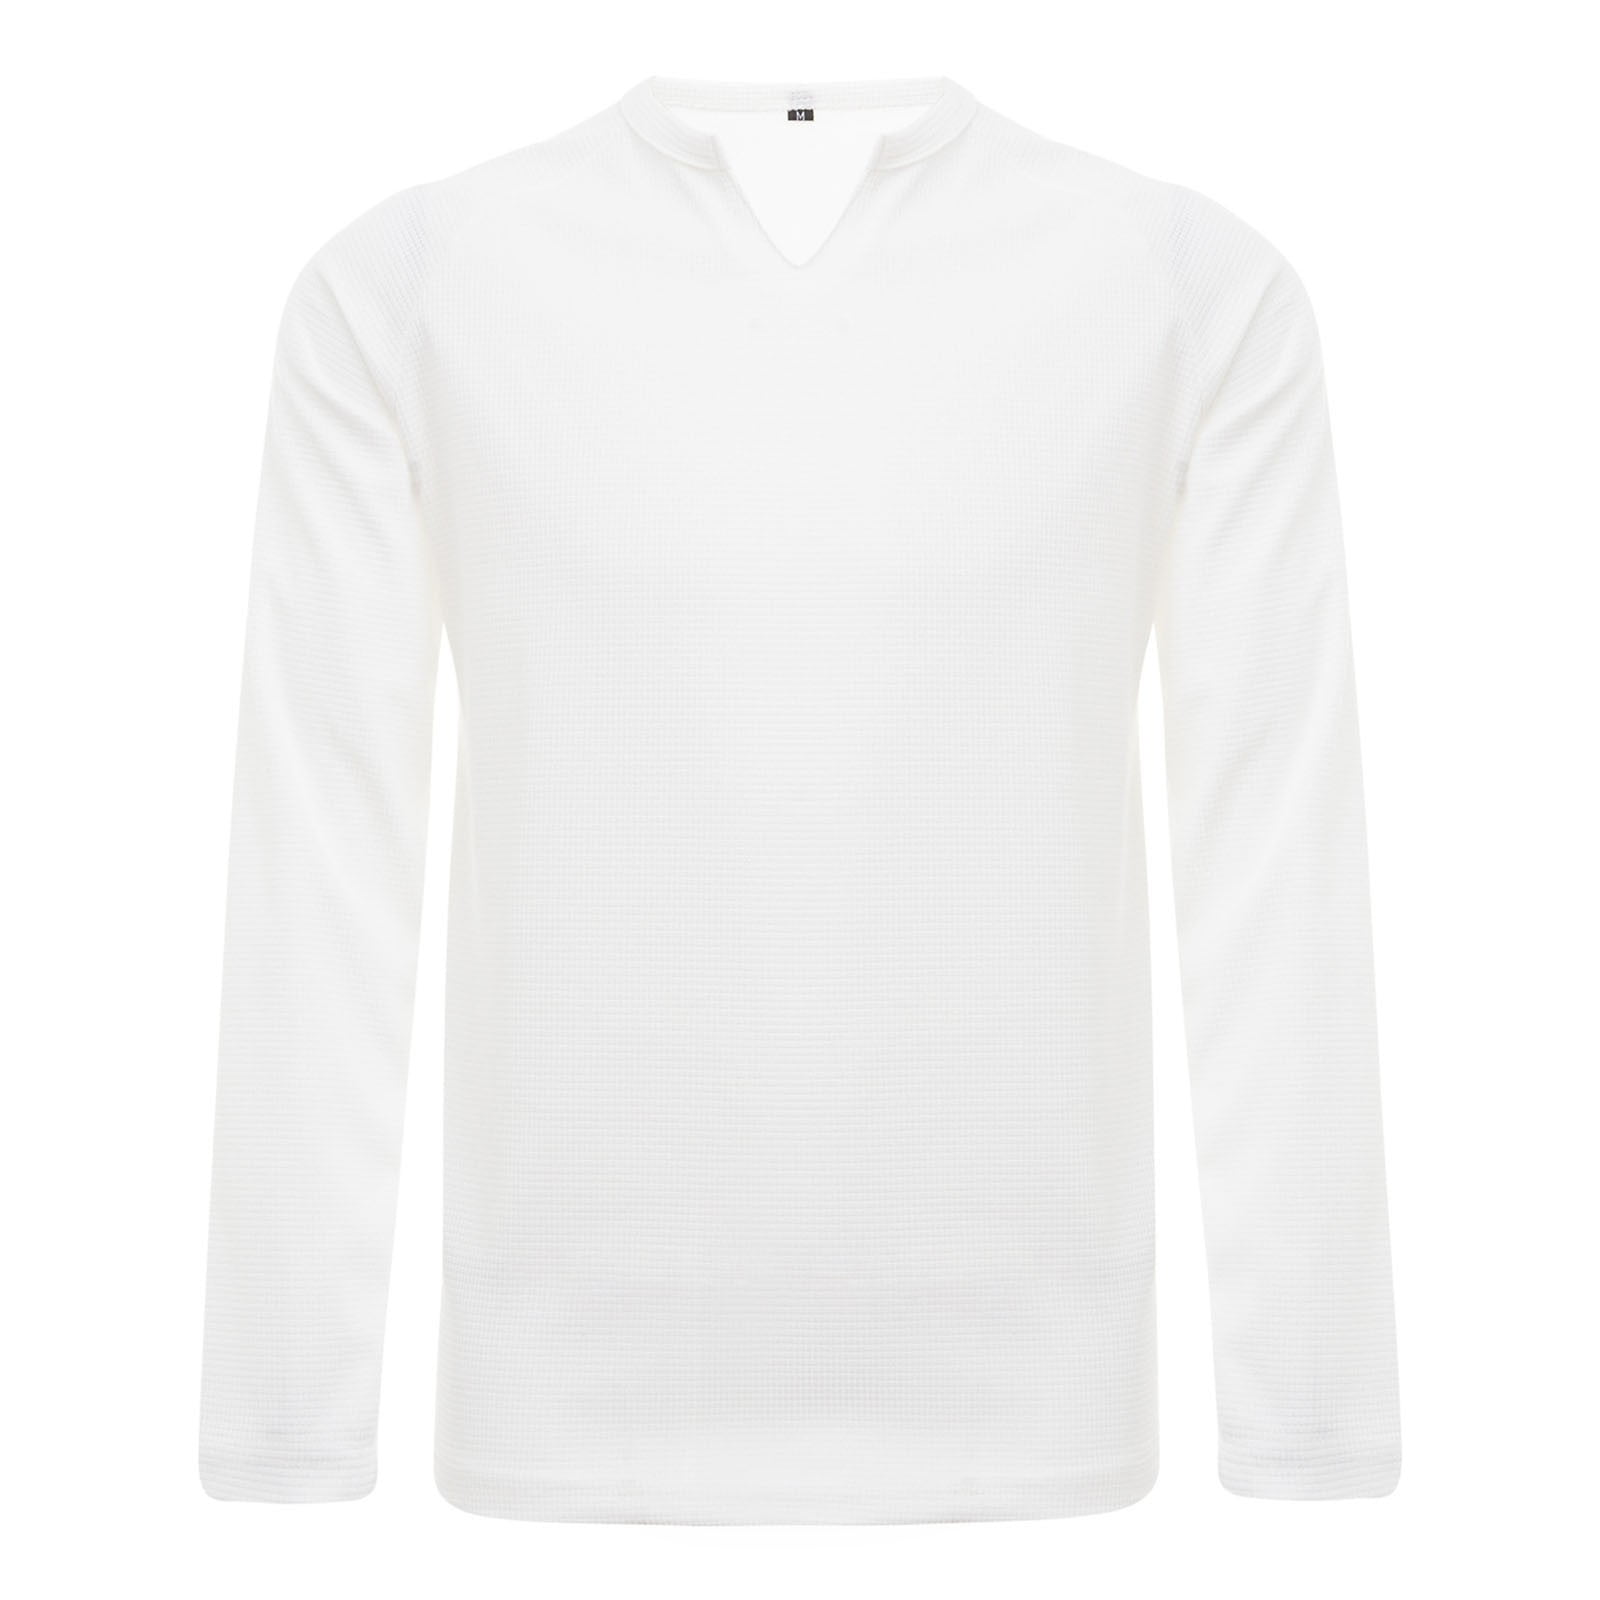 Fozruso Mens Long Sleeve T Shirt Base Small V Neck White T Shirts For ...